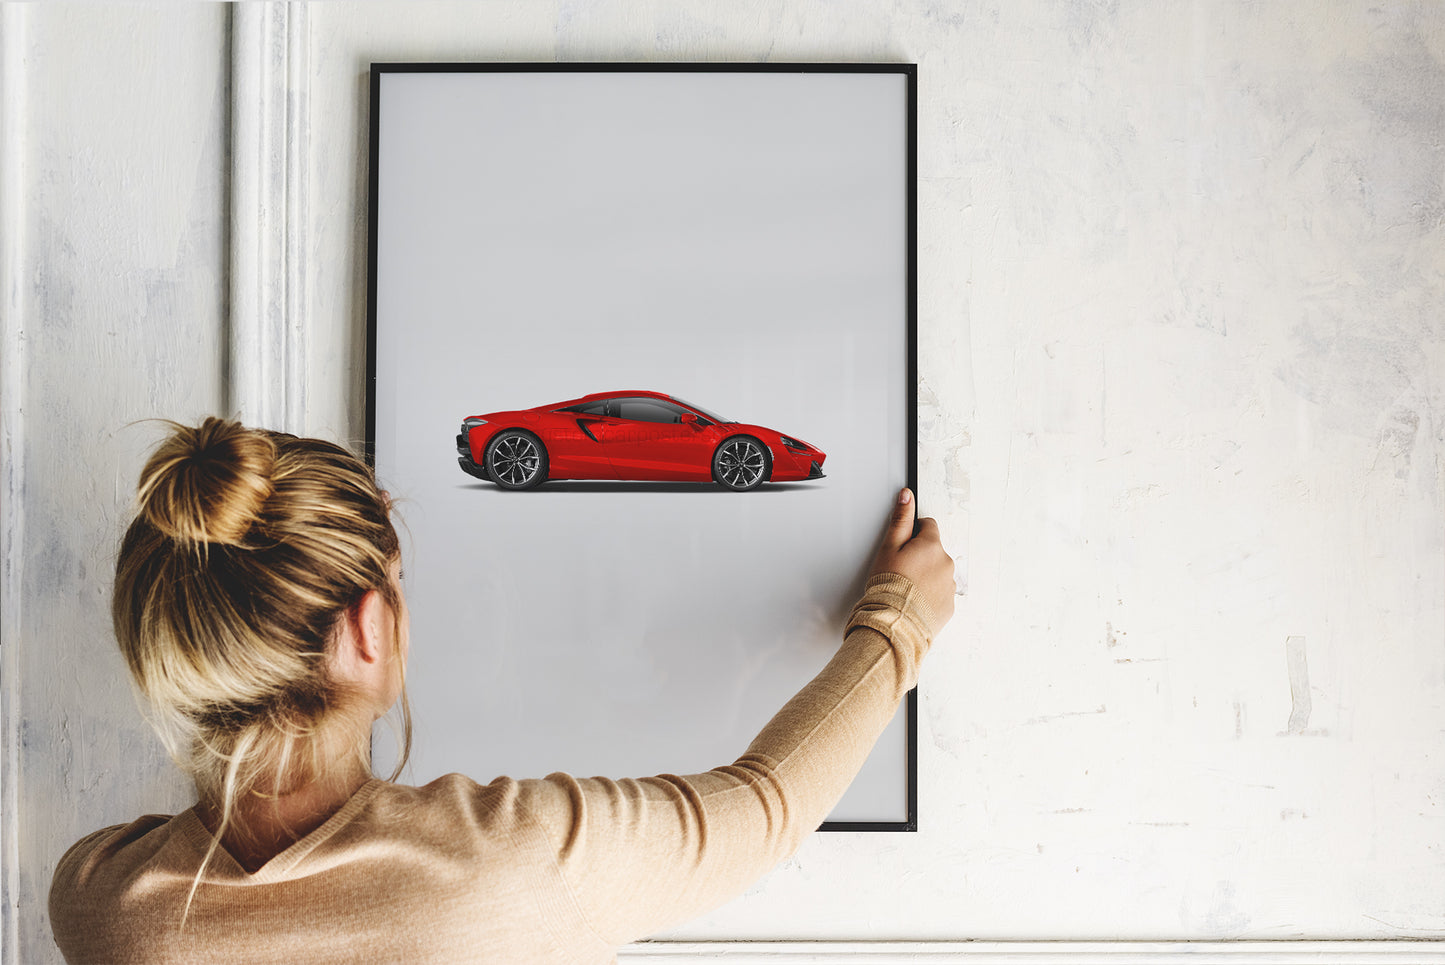 McLaren Artura Poster - Wall Art - Supercars